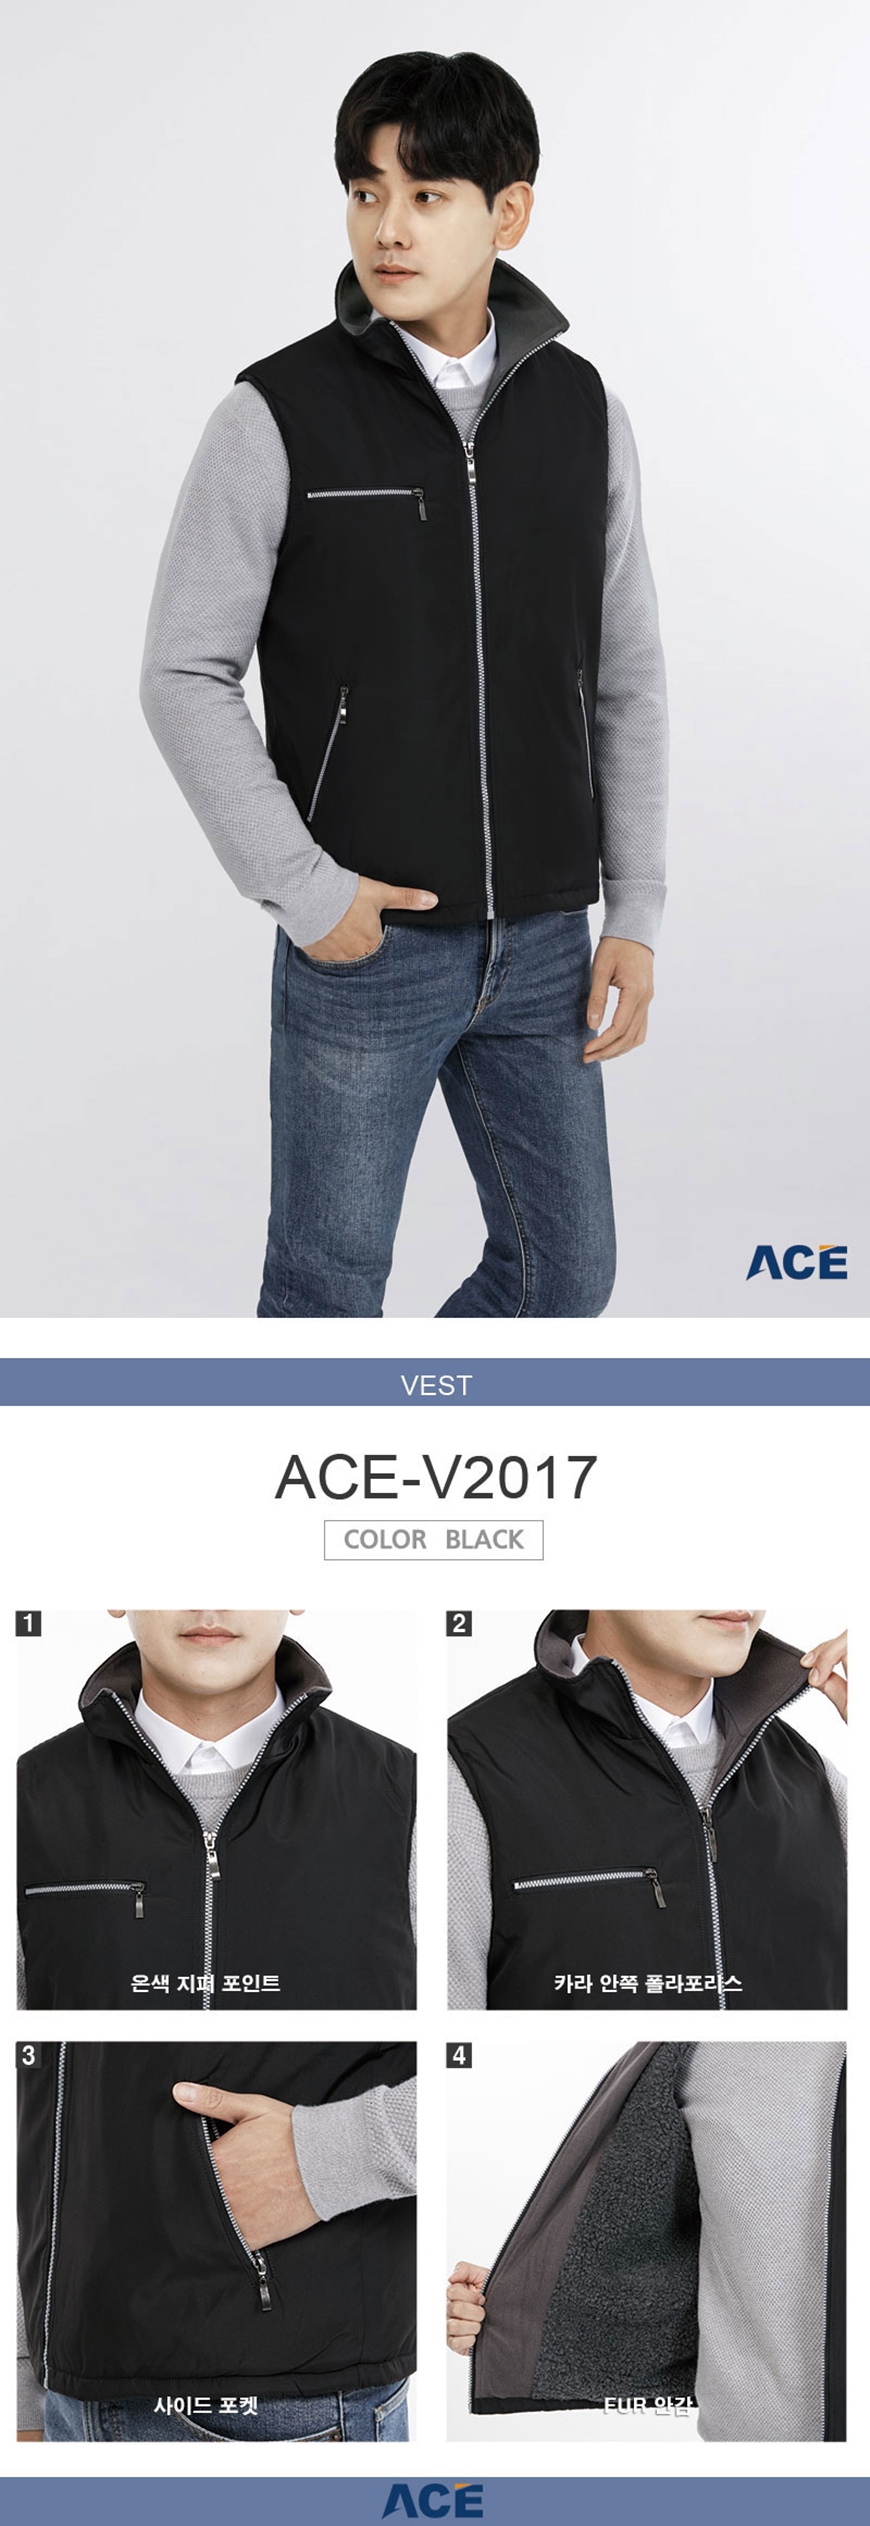 ace-v2017-.jpg